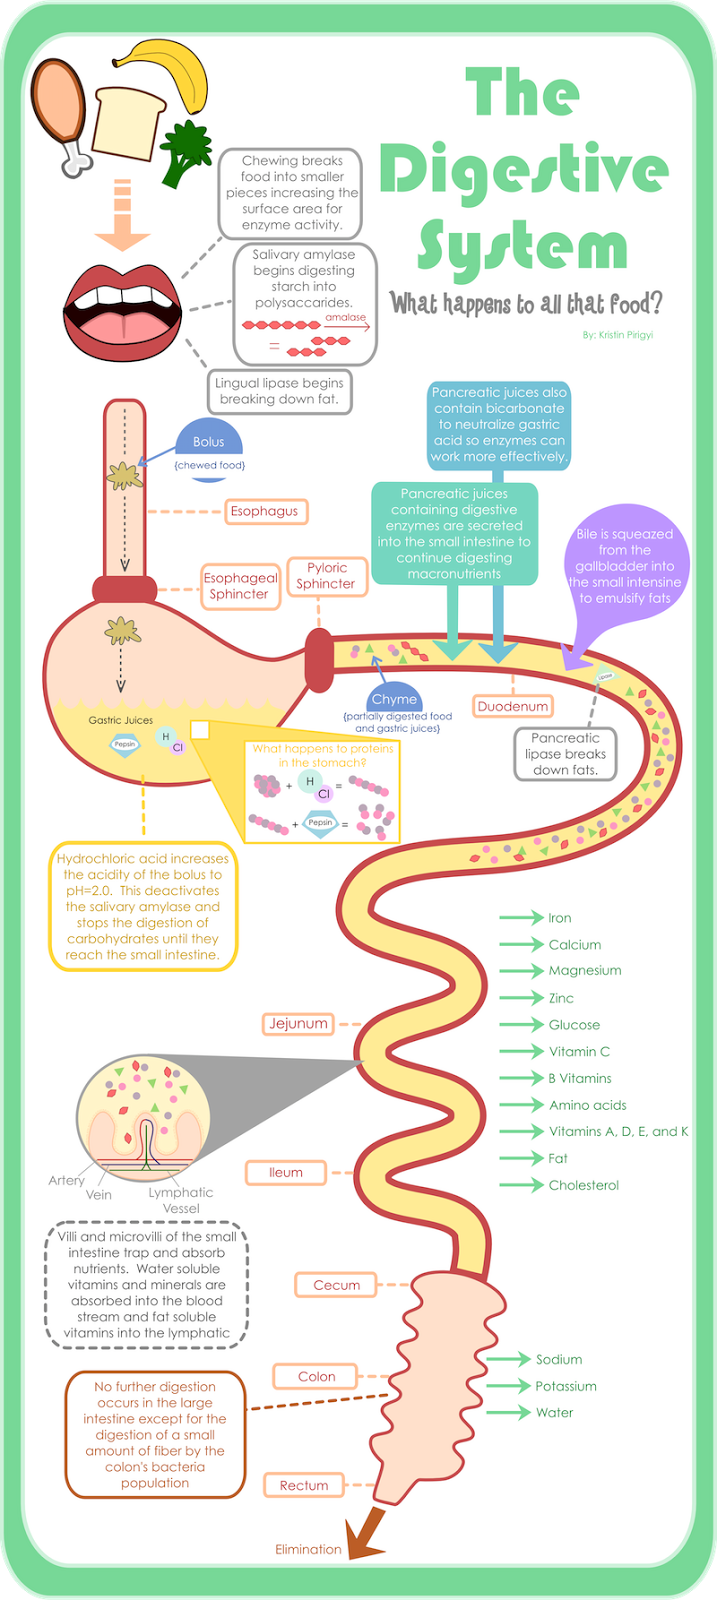 SNA NCCU: A Journey Through the Digestive System